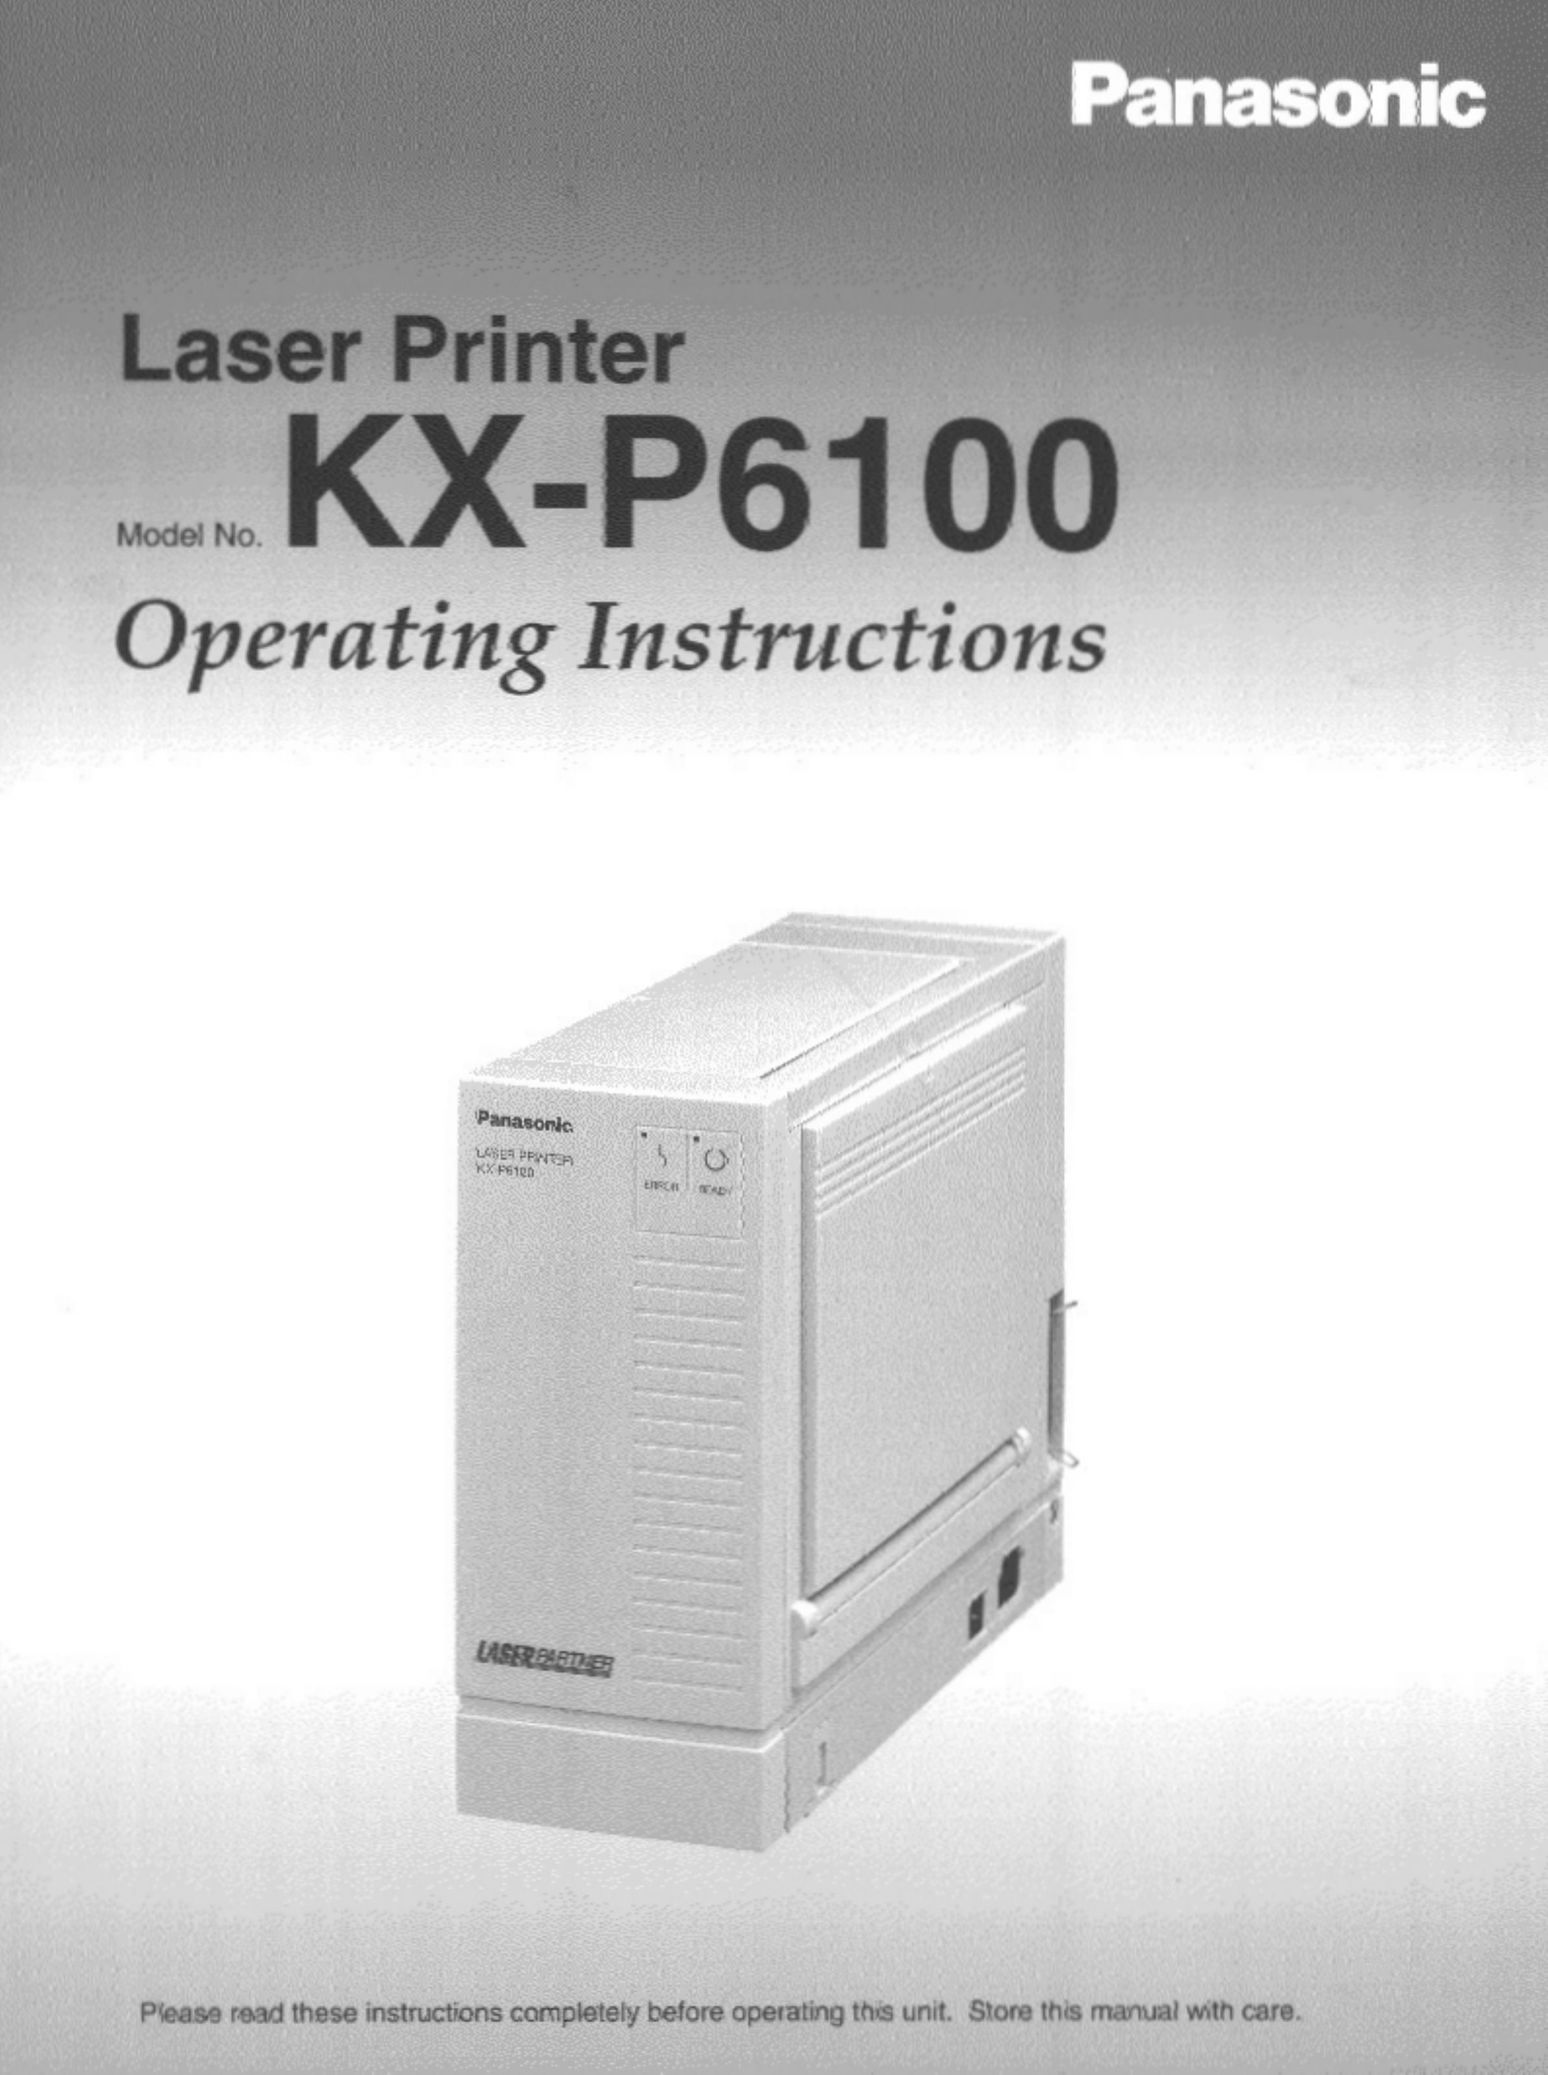 Panasonic KX-P6100 Printer User Manual